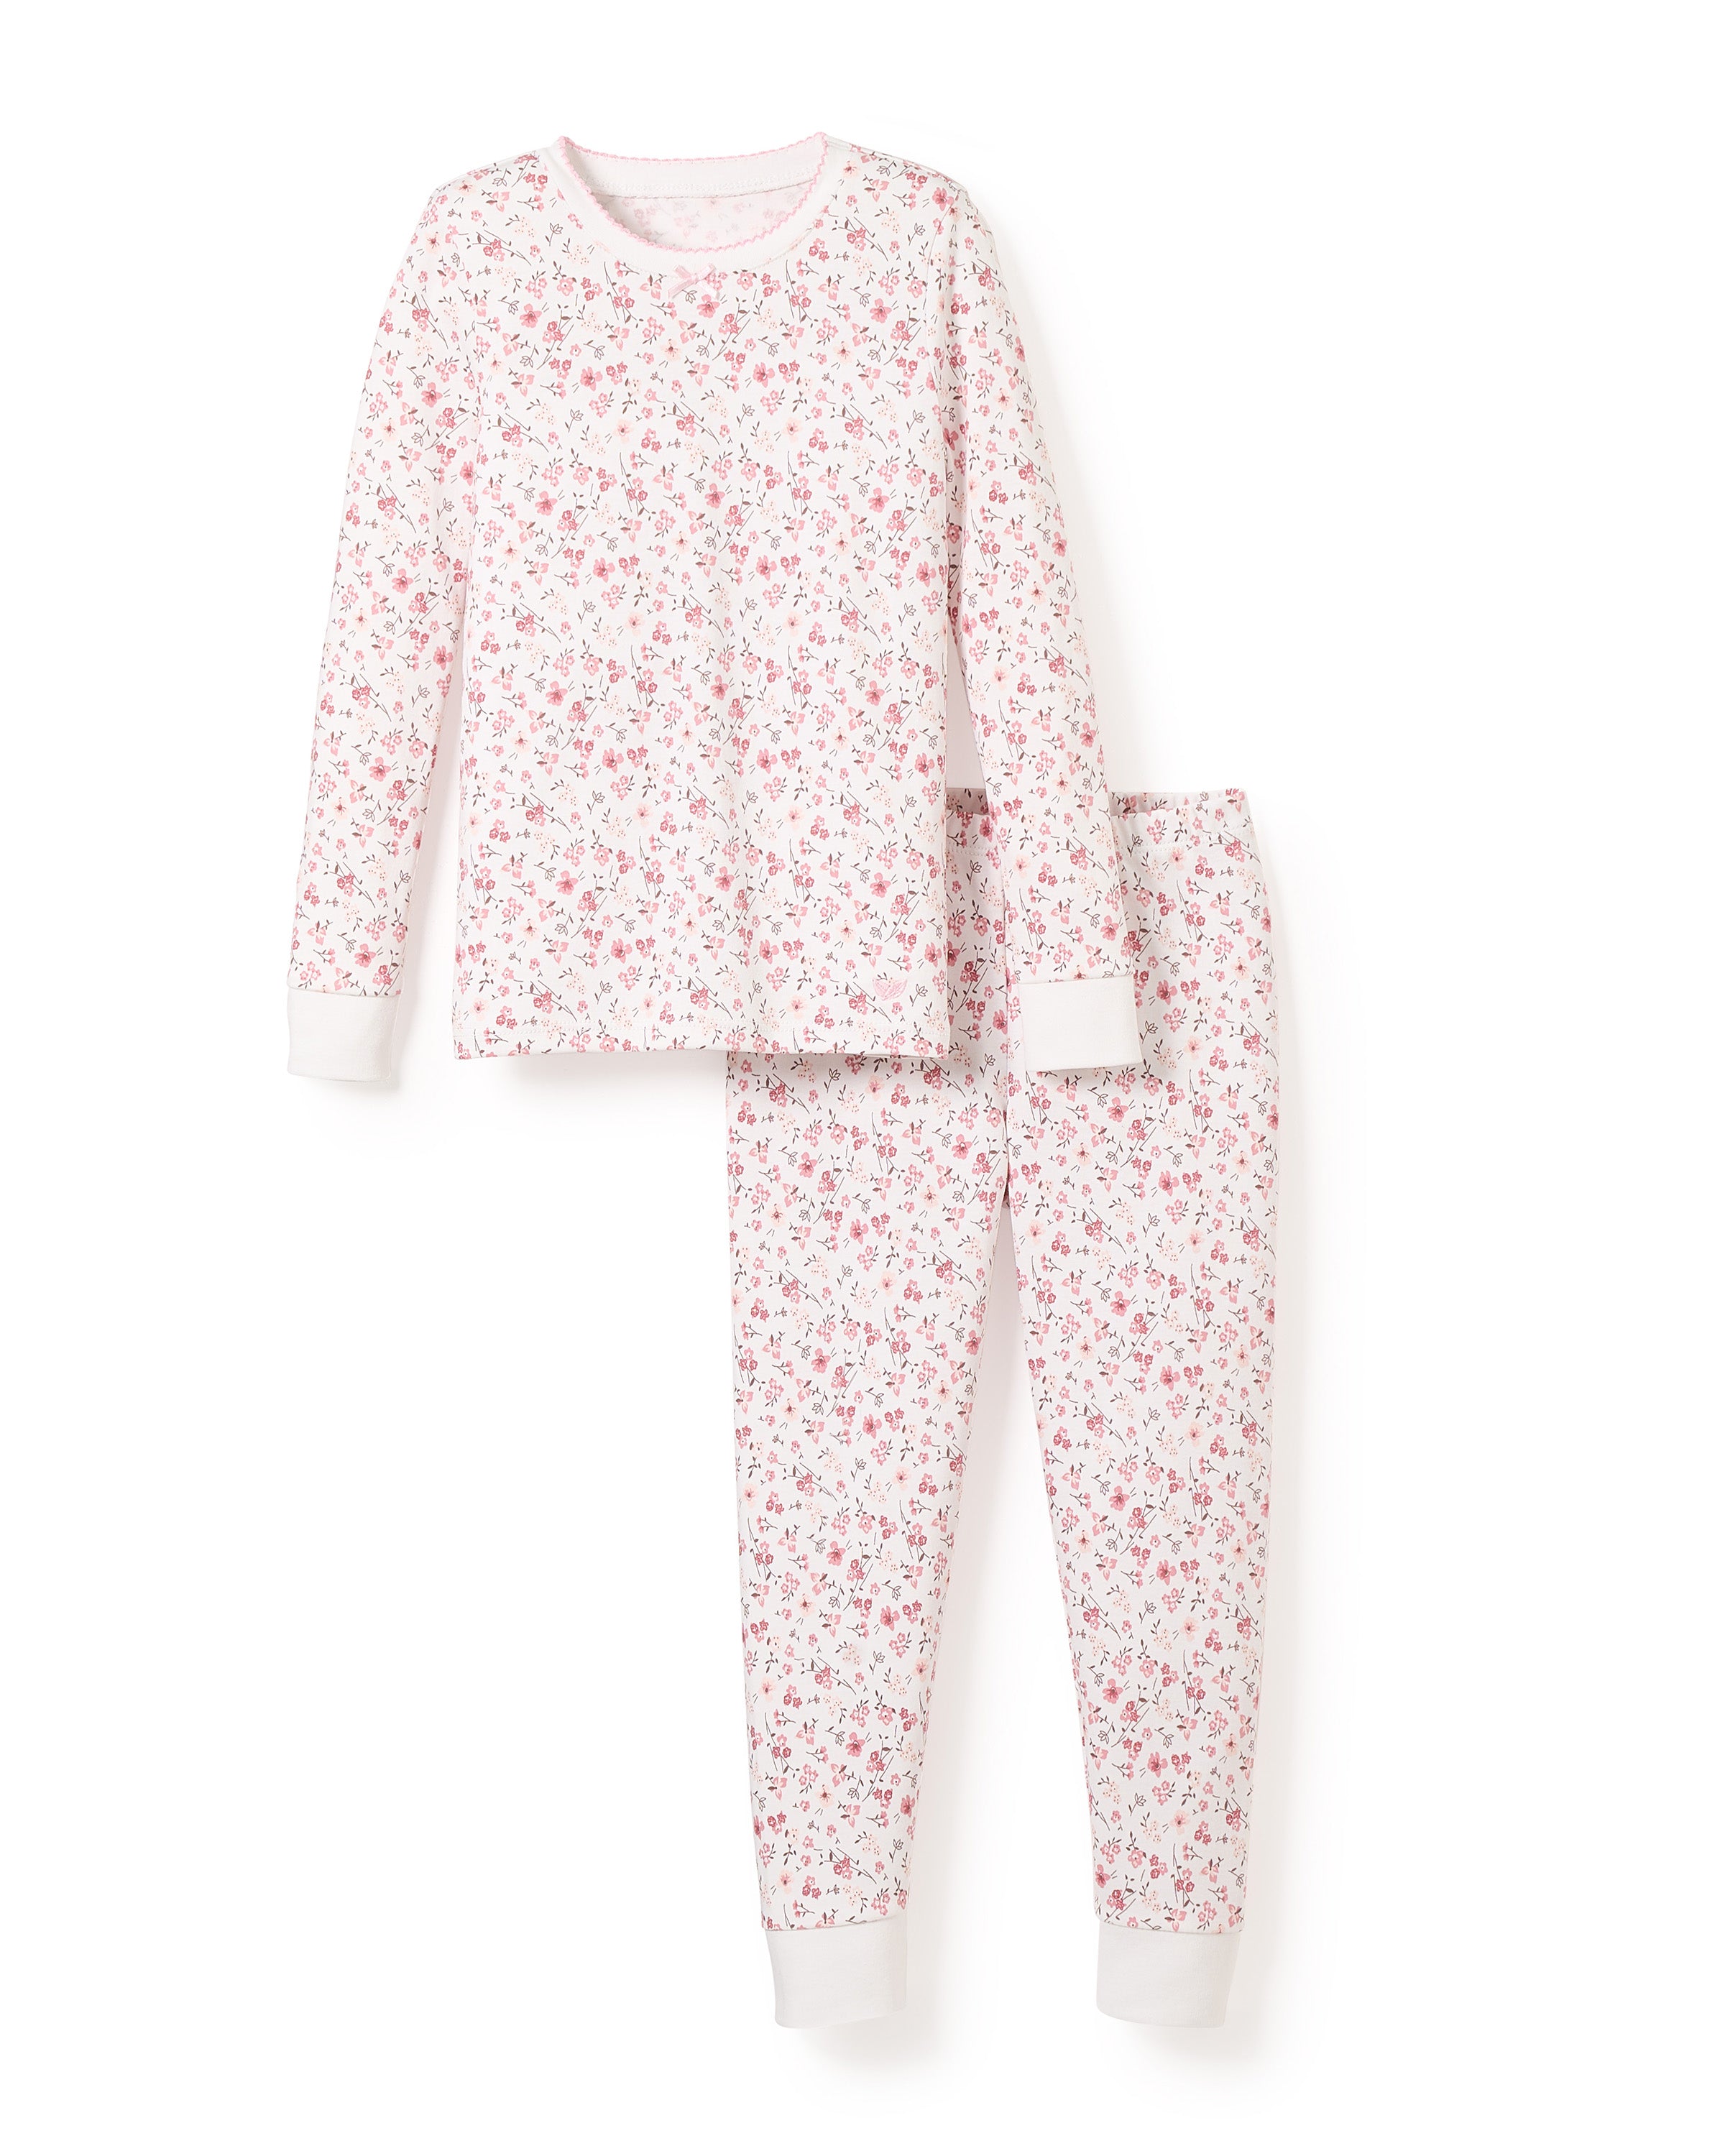 Kid's Pima Snug Fit Pajama Set in Dorset Floral